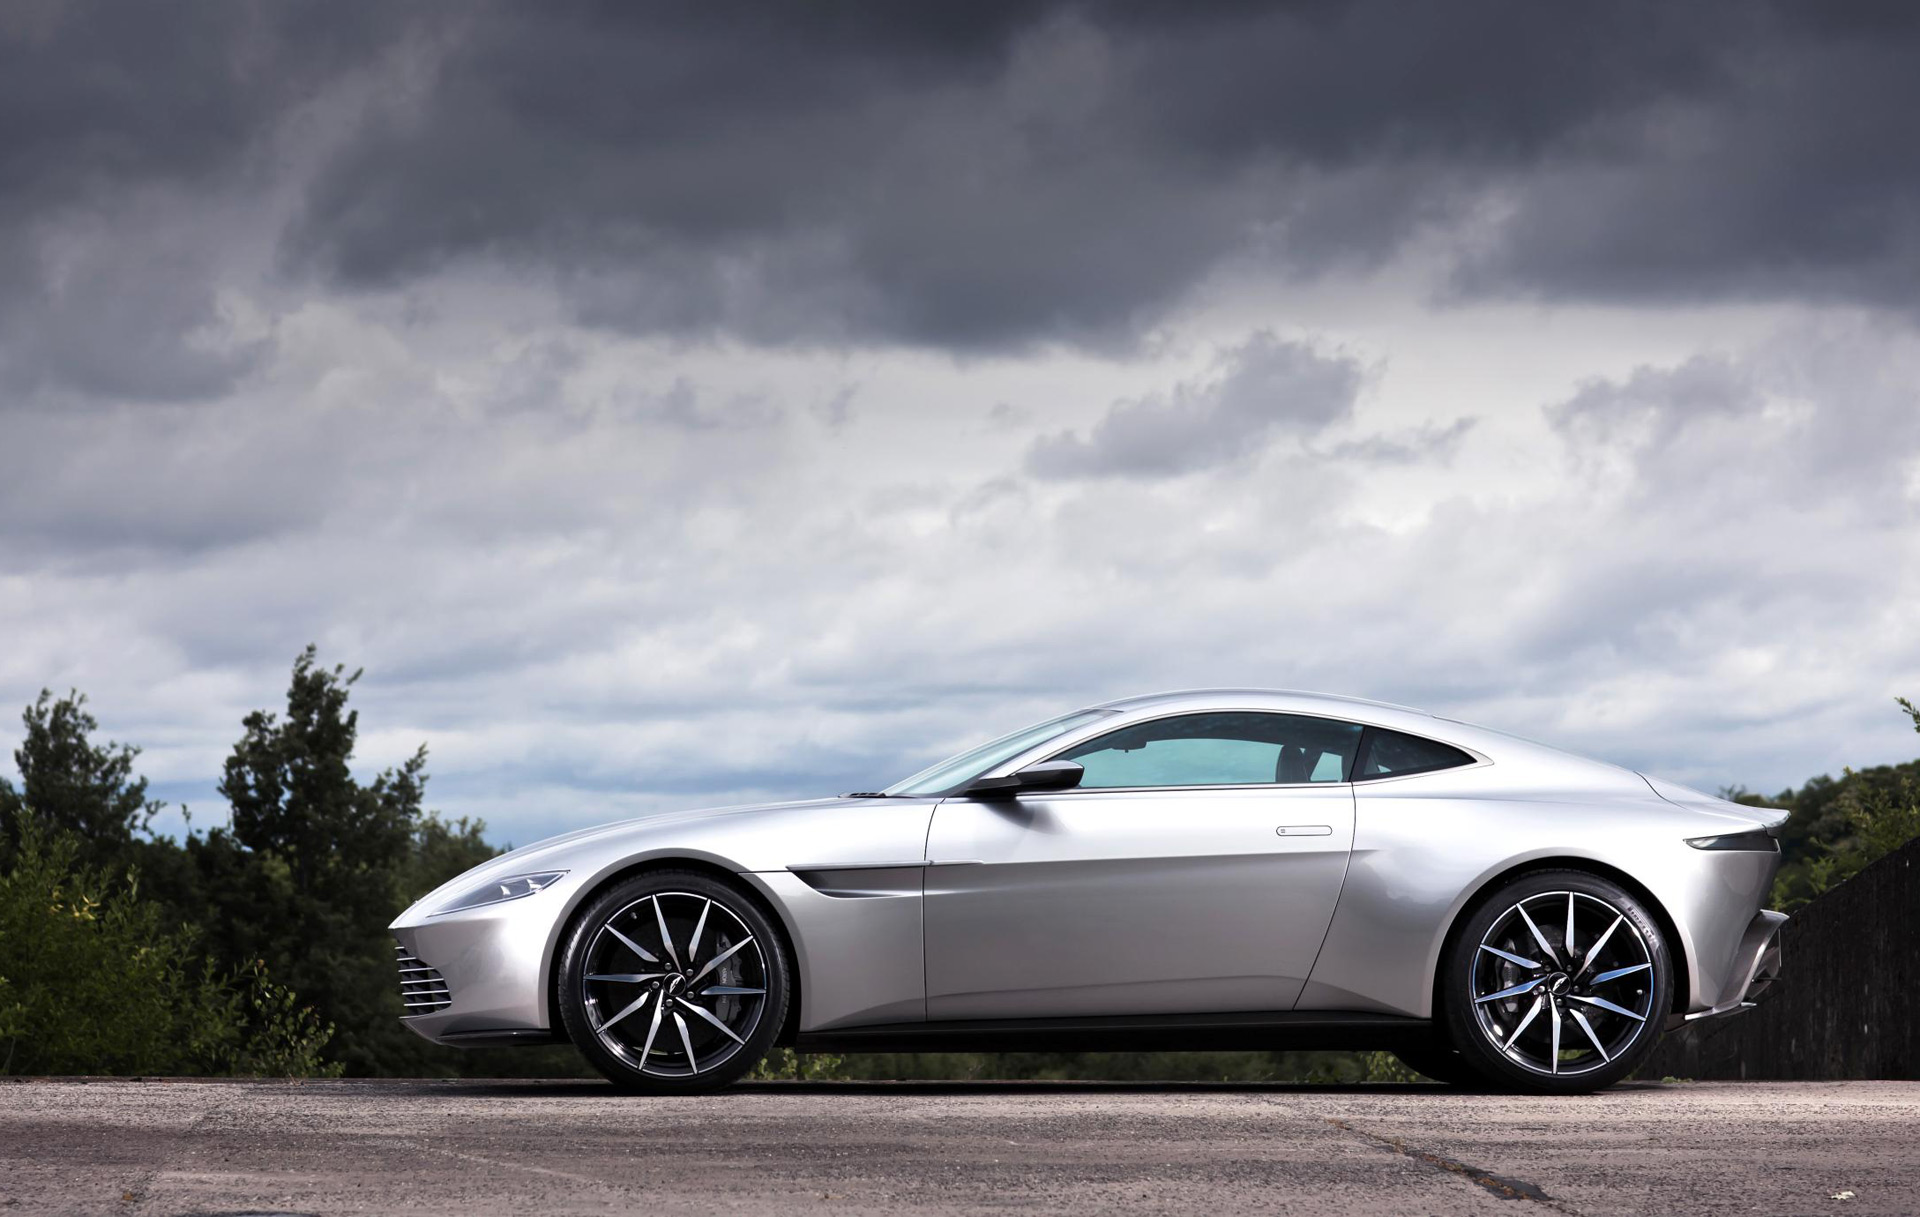 James Bond's Aston Martin DB10 was based off the 2019 Vantage